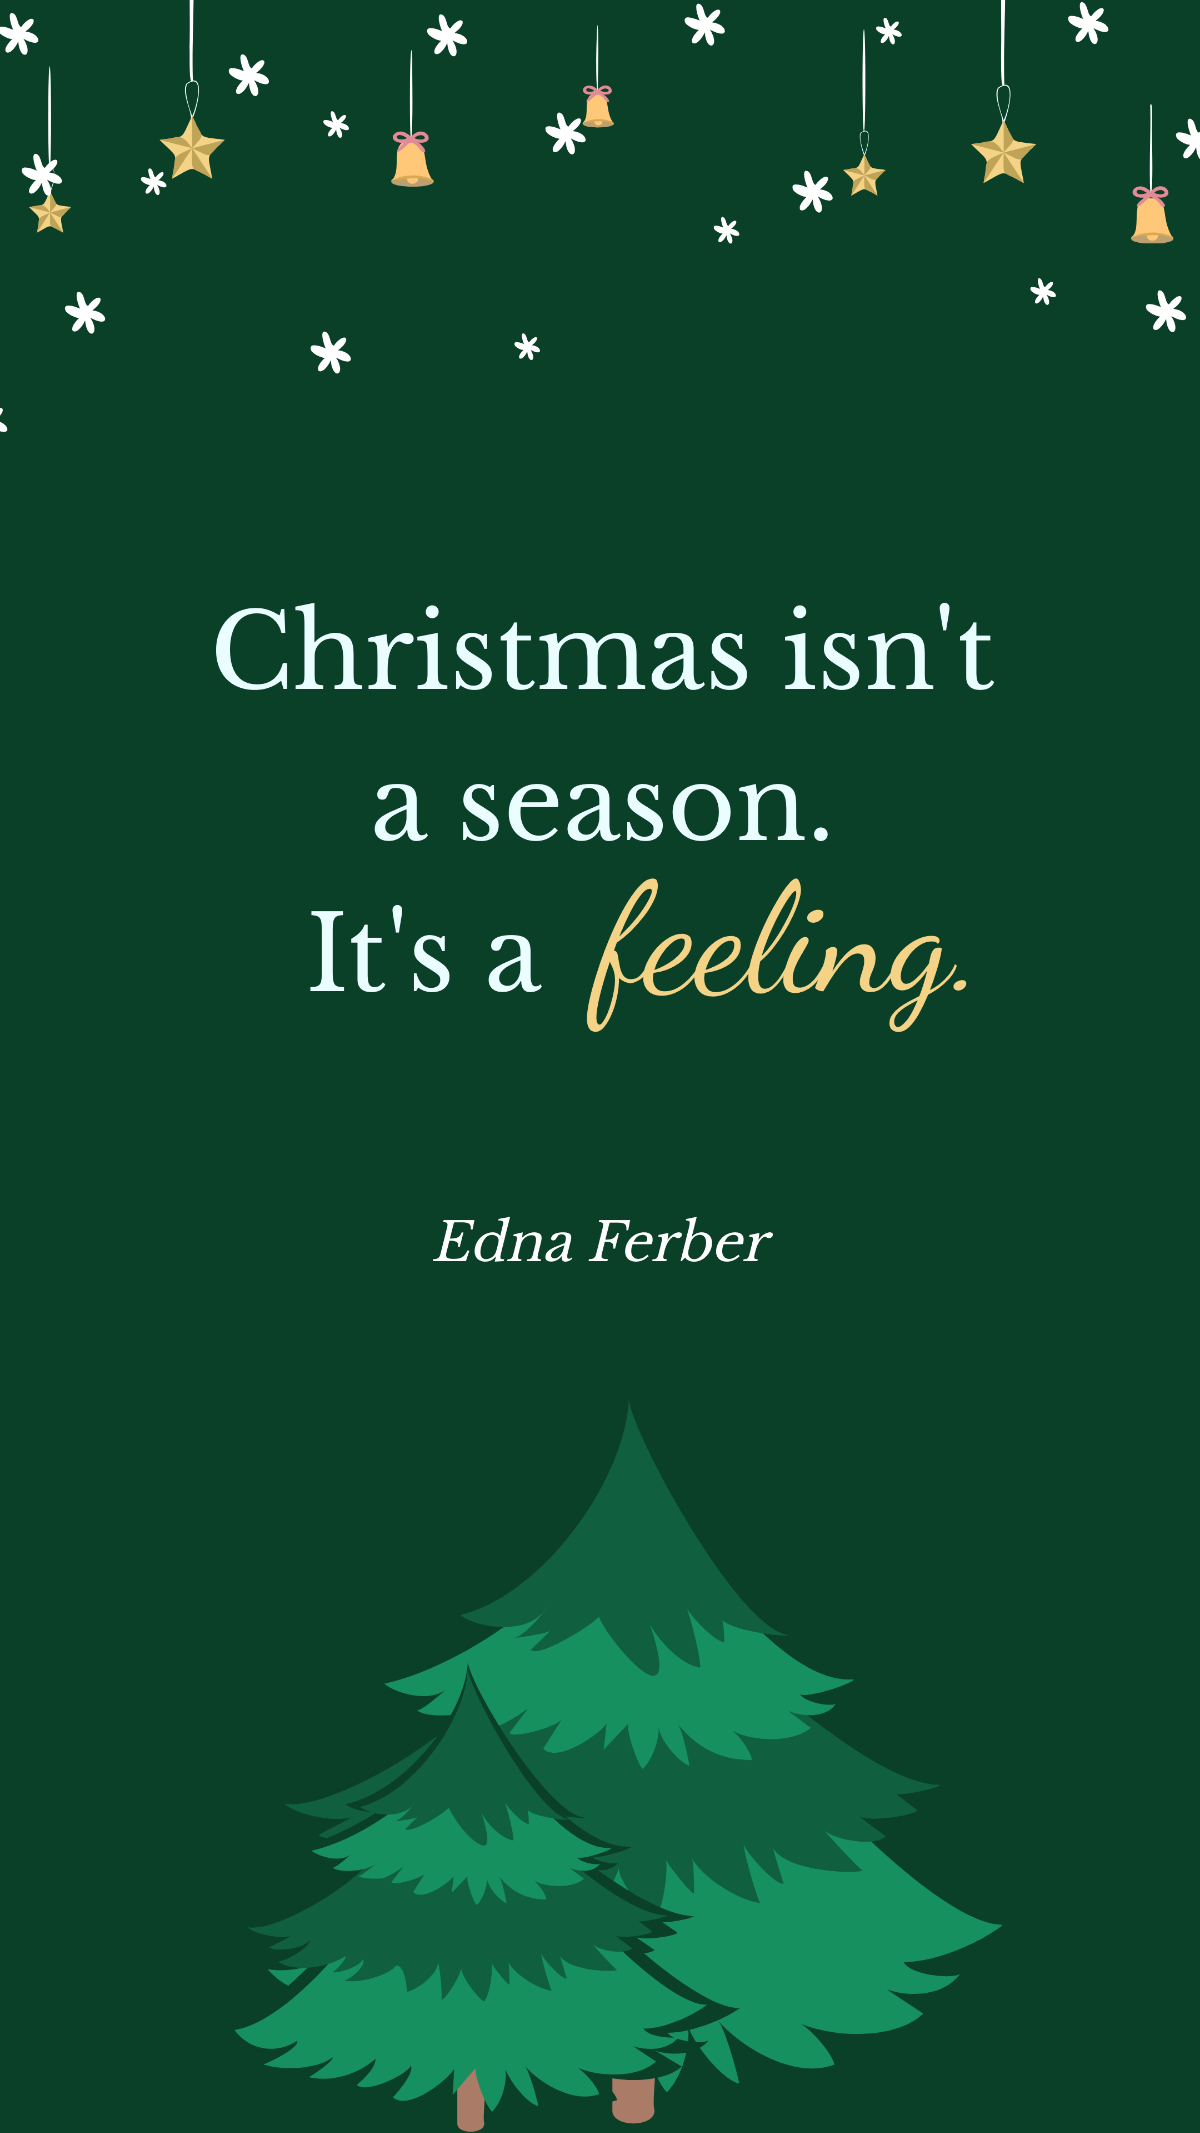 Edna Ferber - Christmas isn't a season. It's a feeling. Template